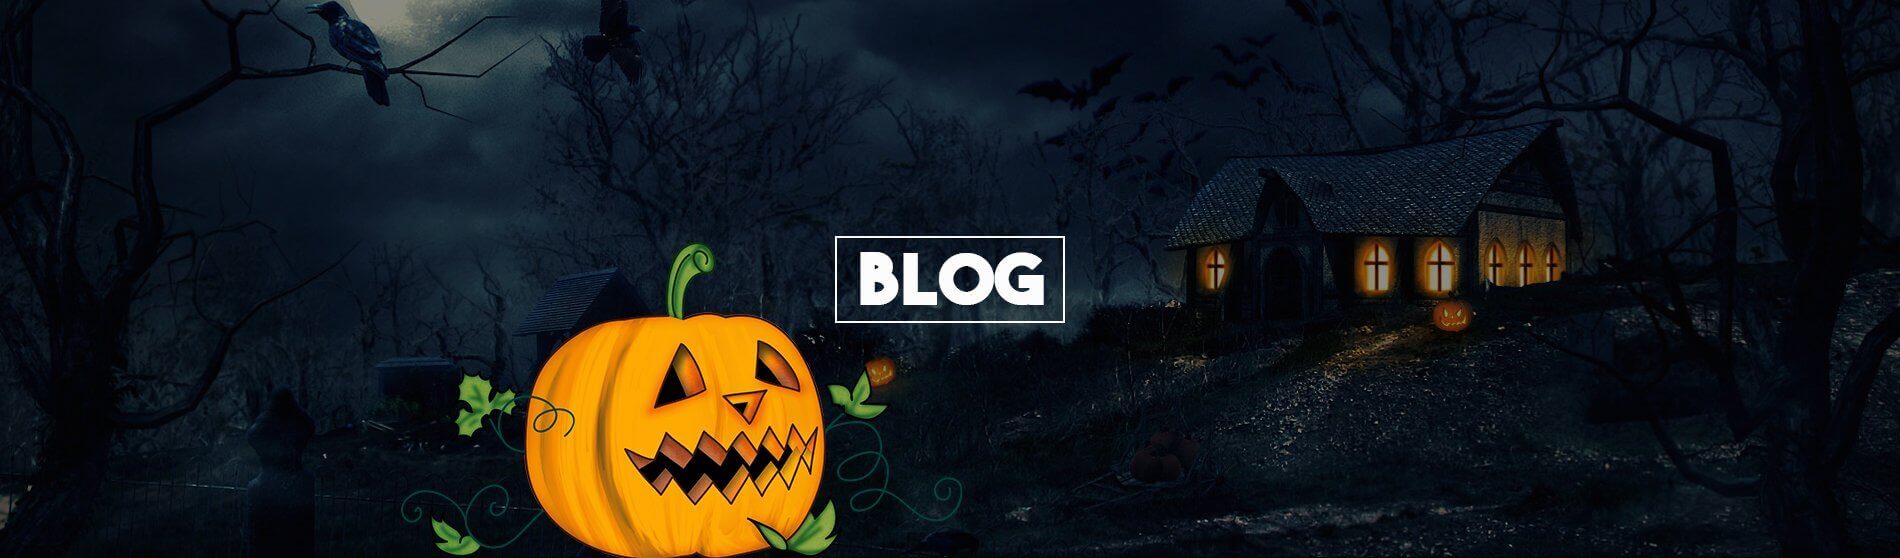 Glendale Halloween : glendalehalloween : blog